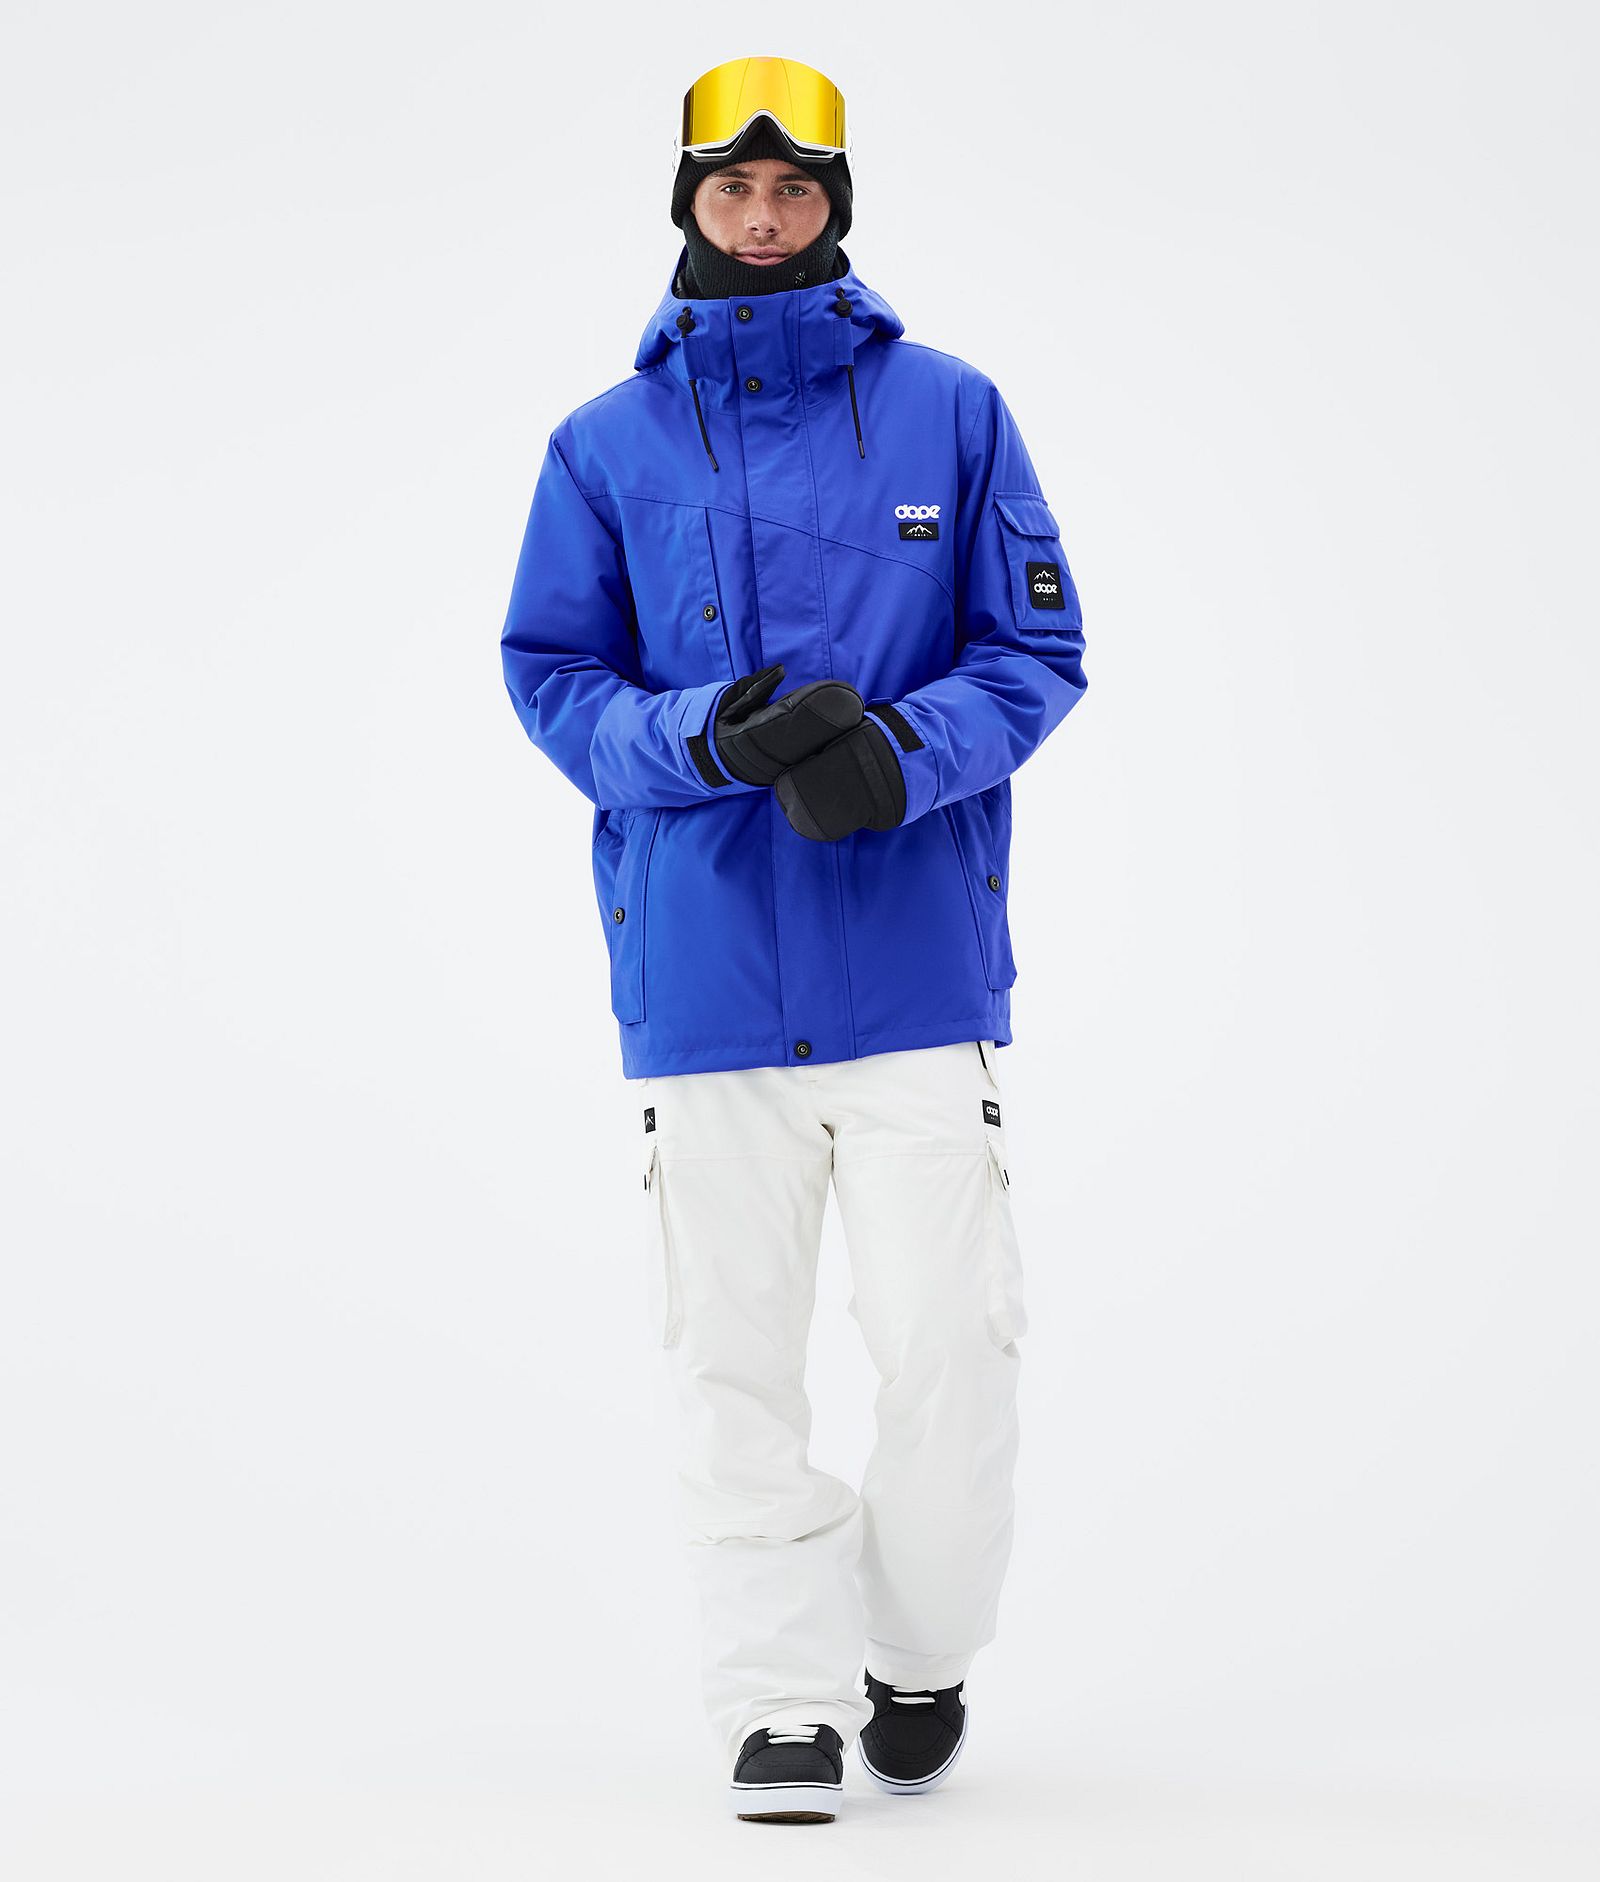 Dope Adept Snowboard Outfit Men Cobalt Blue/Old White